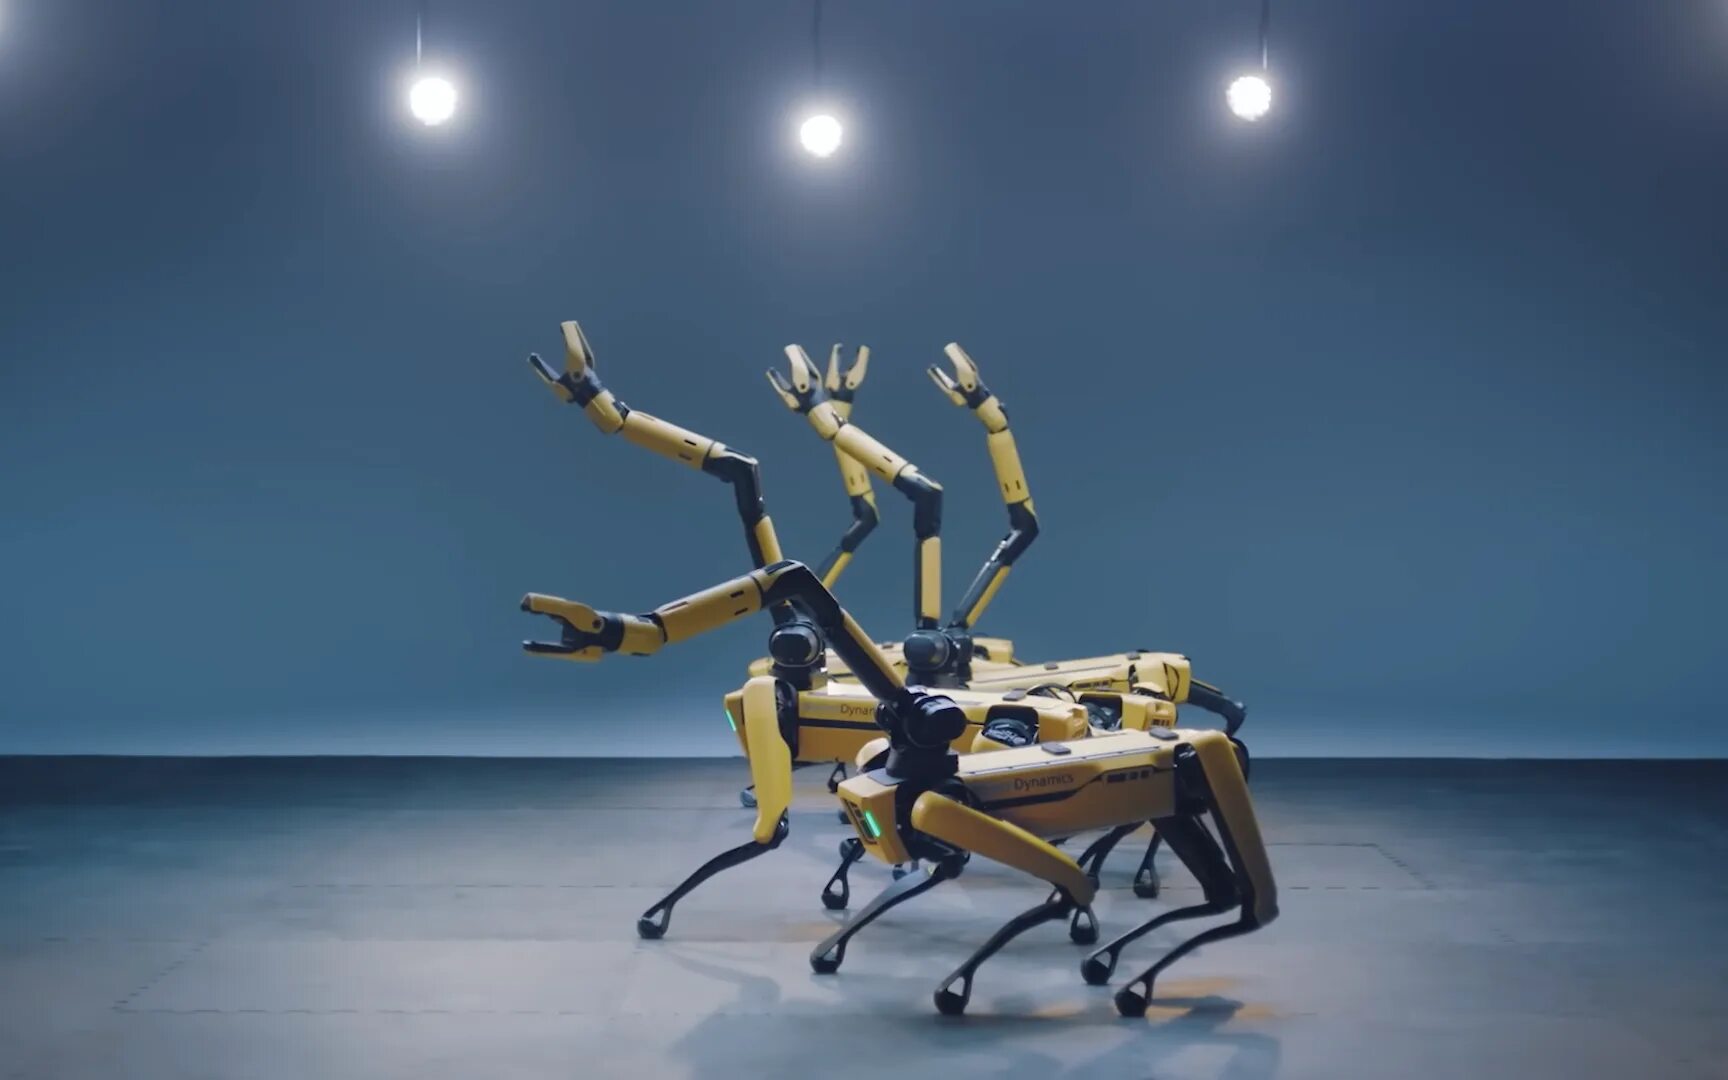 Танец роботов на играх будущего. Spot (Boston Dynamics, США). Танец робота. Робот танцует. Бостон Дайнемикс робот.